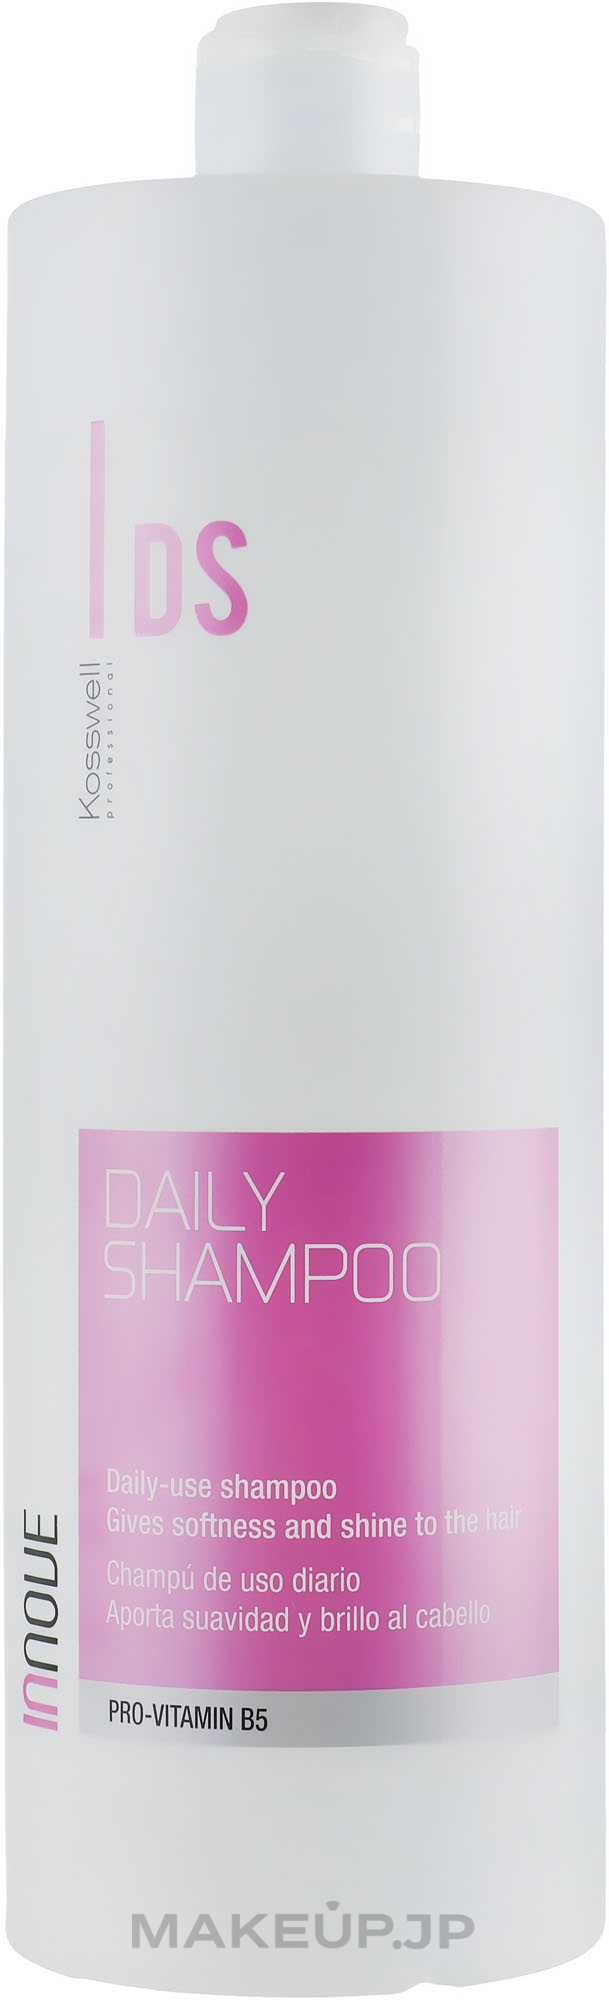 Shampoo for Daily Use - Kosswell Professional Innove Daily Shampoo — photo 1000 ml